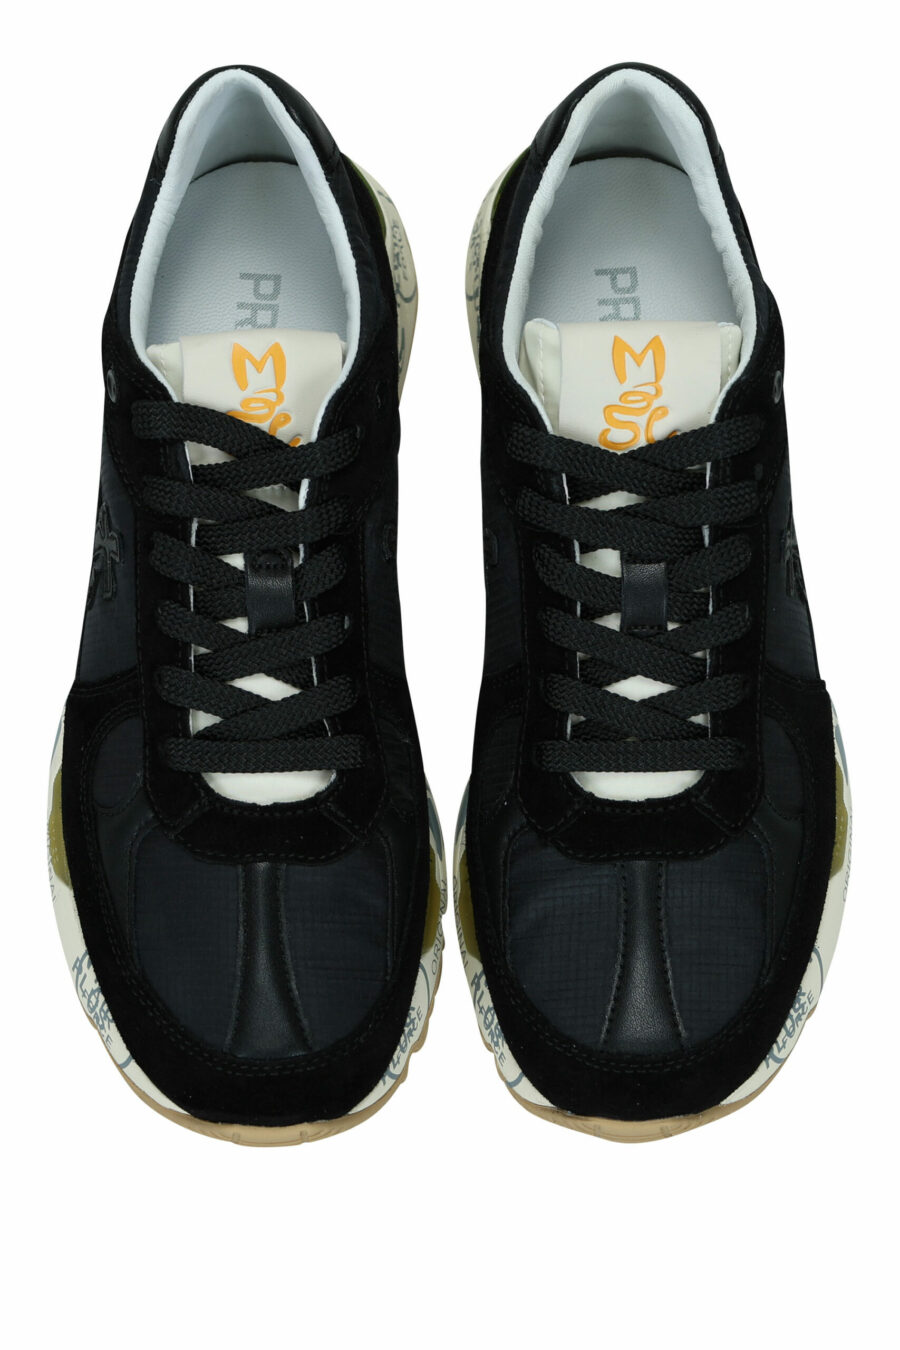 Zapatillas negras mix con suela blanca "Mase 6624" - 8053680270159 4 scaled